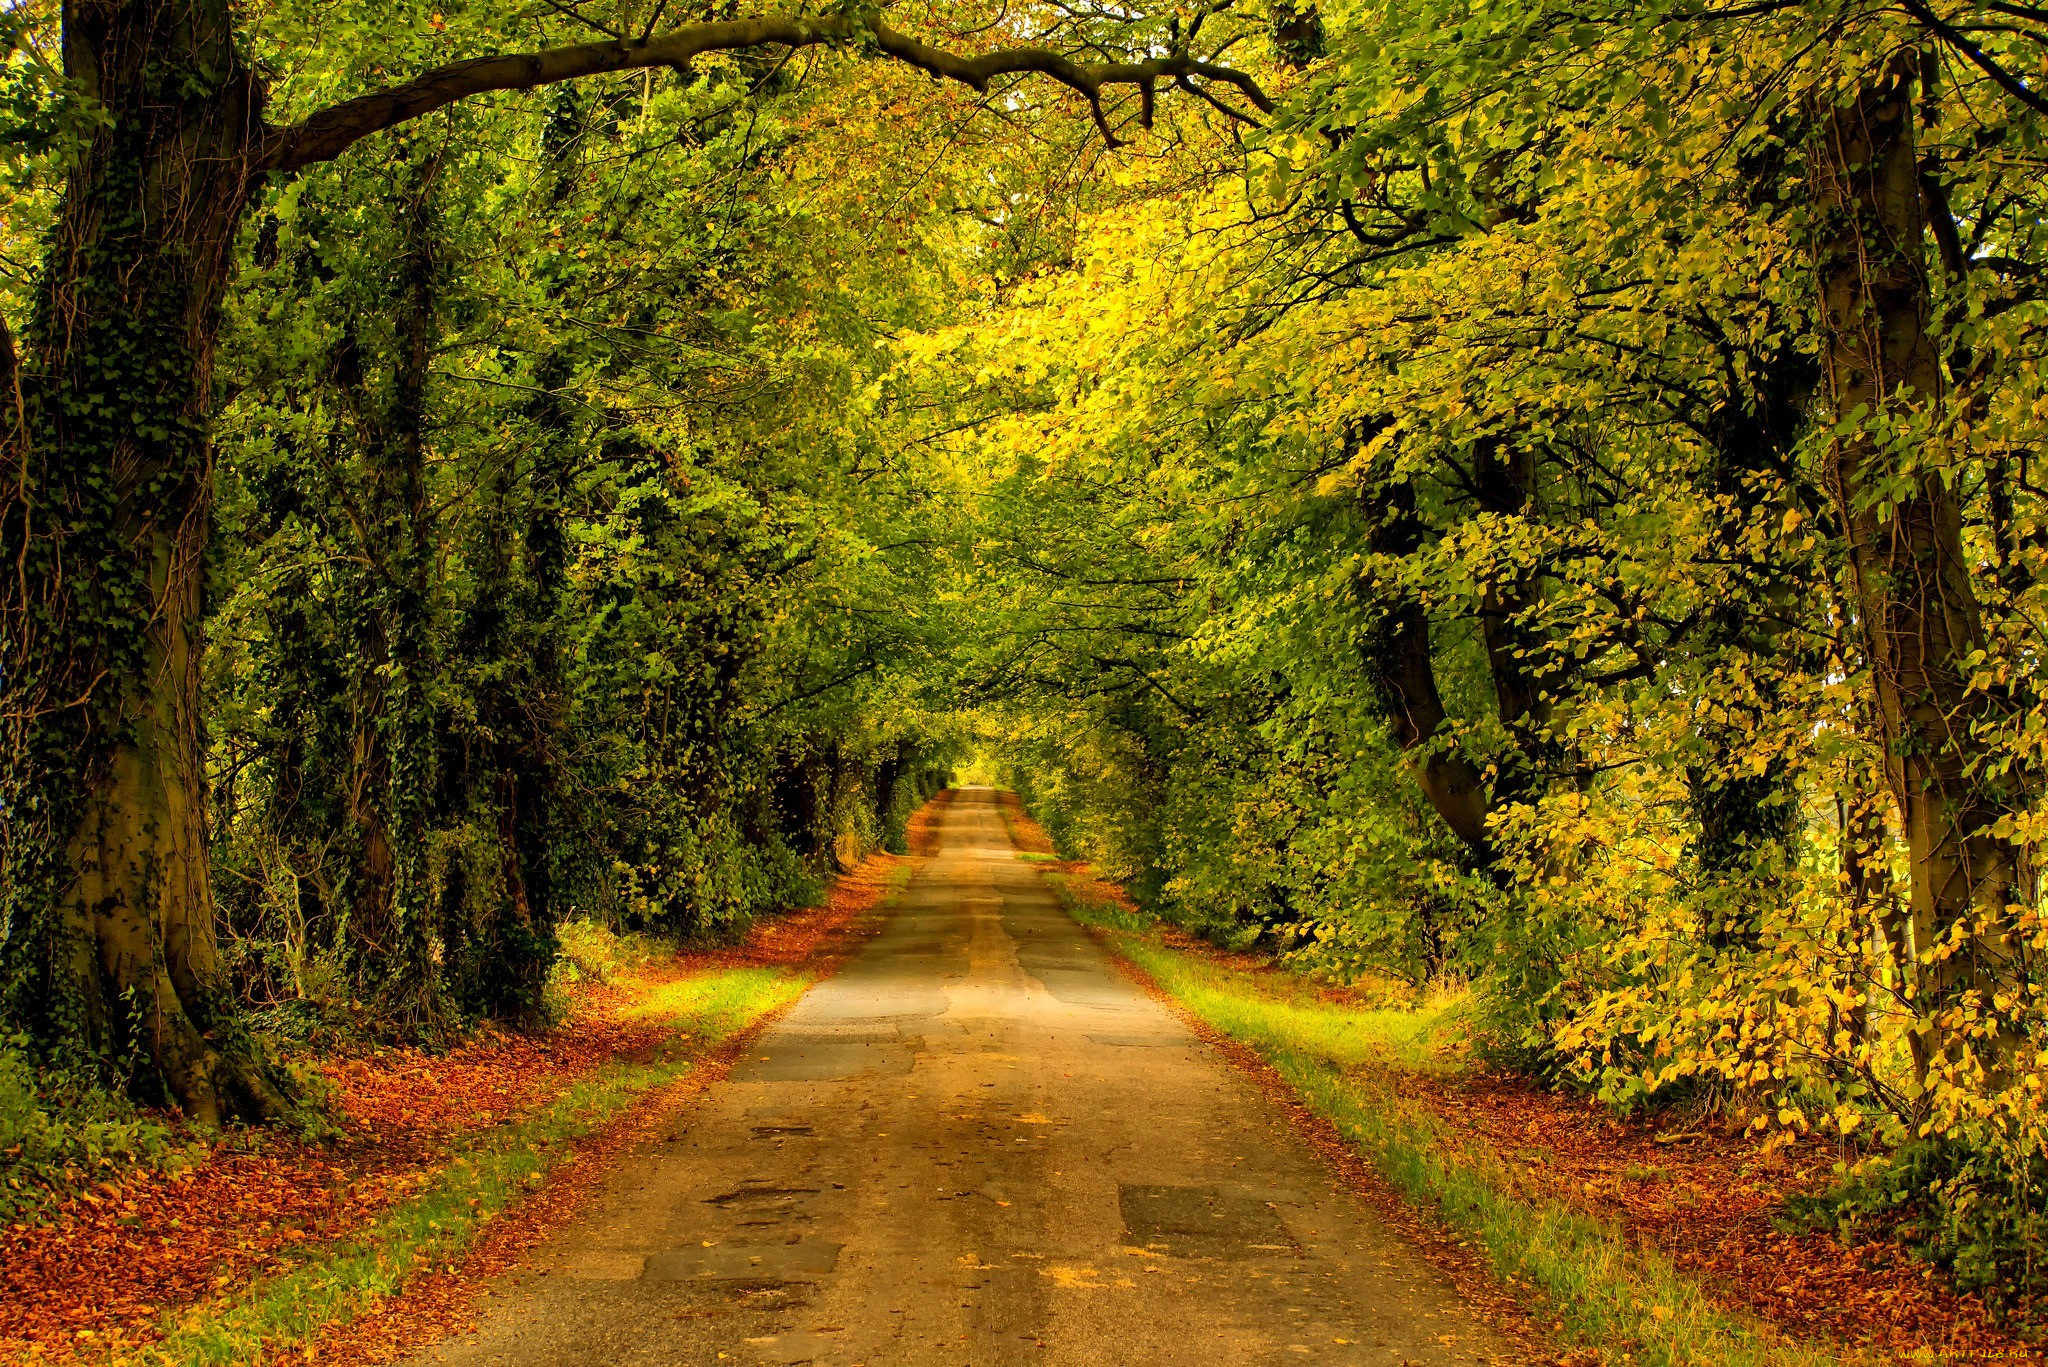 природа, дороги, forest, nature, park, trees, leaves, colorful, road, path, autumn, fall, colors, walk, листья, осень, деревья, дорога, лес, парк